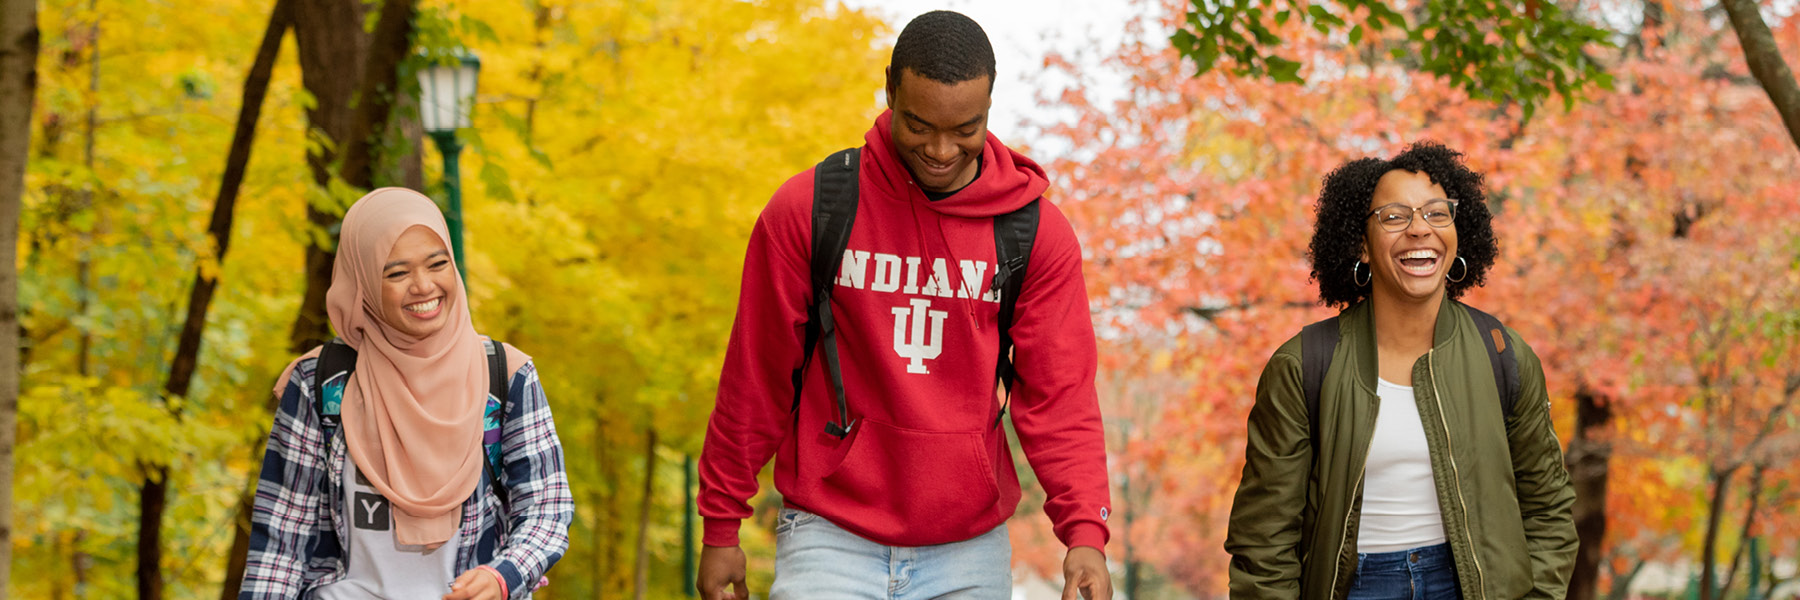 IU students walking together in the fall season.